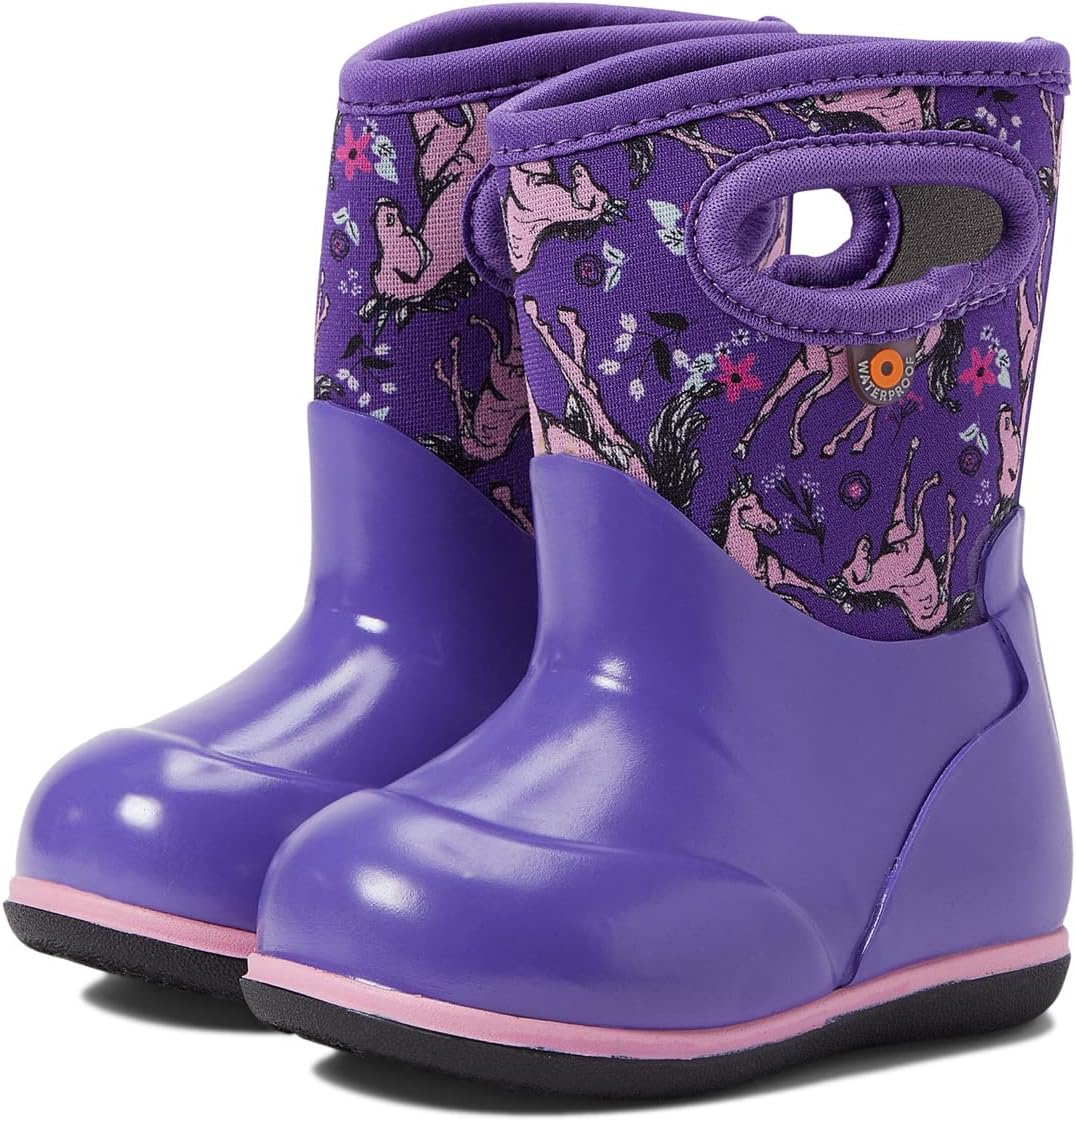 Резиновые сапоги Baby Classic Unicorn Awesome Bogs, цвет Violet Multi сапоги резиновые unicorn kamik цвет purple violet ekn pur